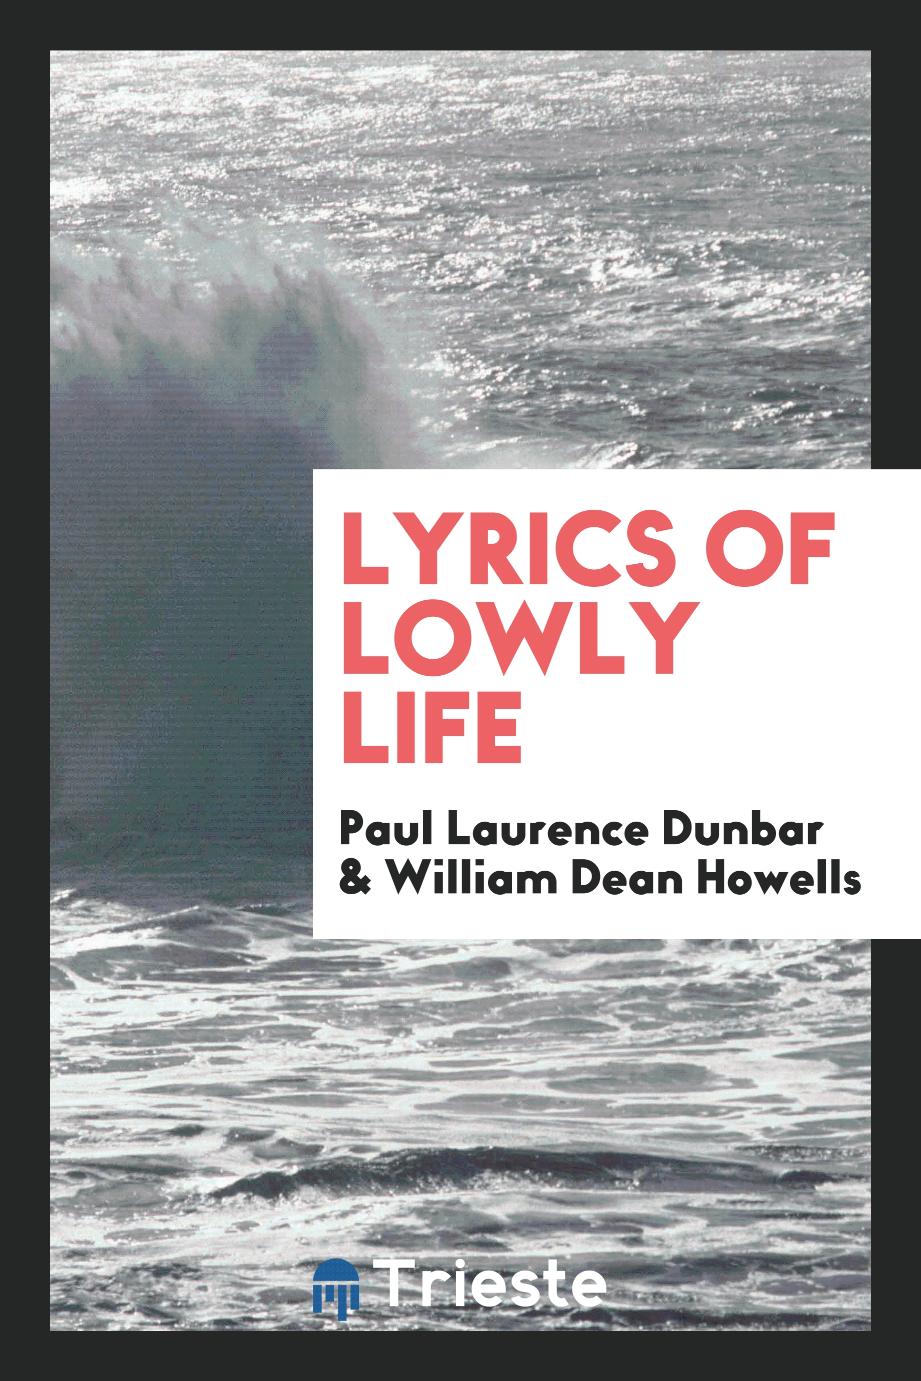 Paul Laurence Dunbar, William Dean Howells - Lyrics of lowly life